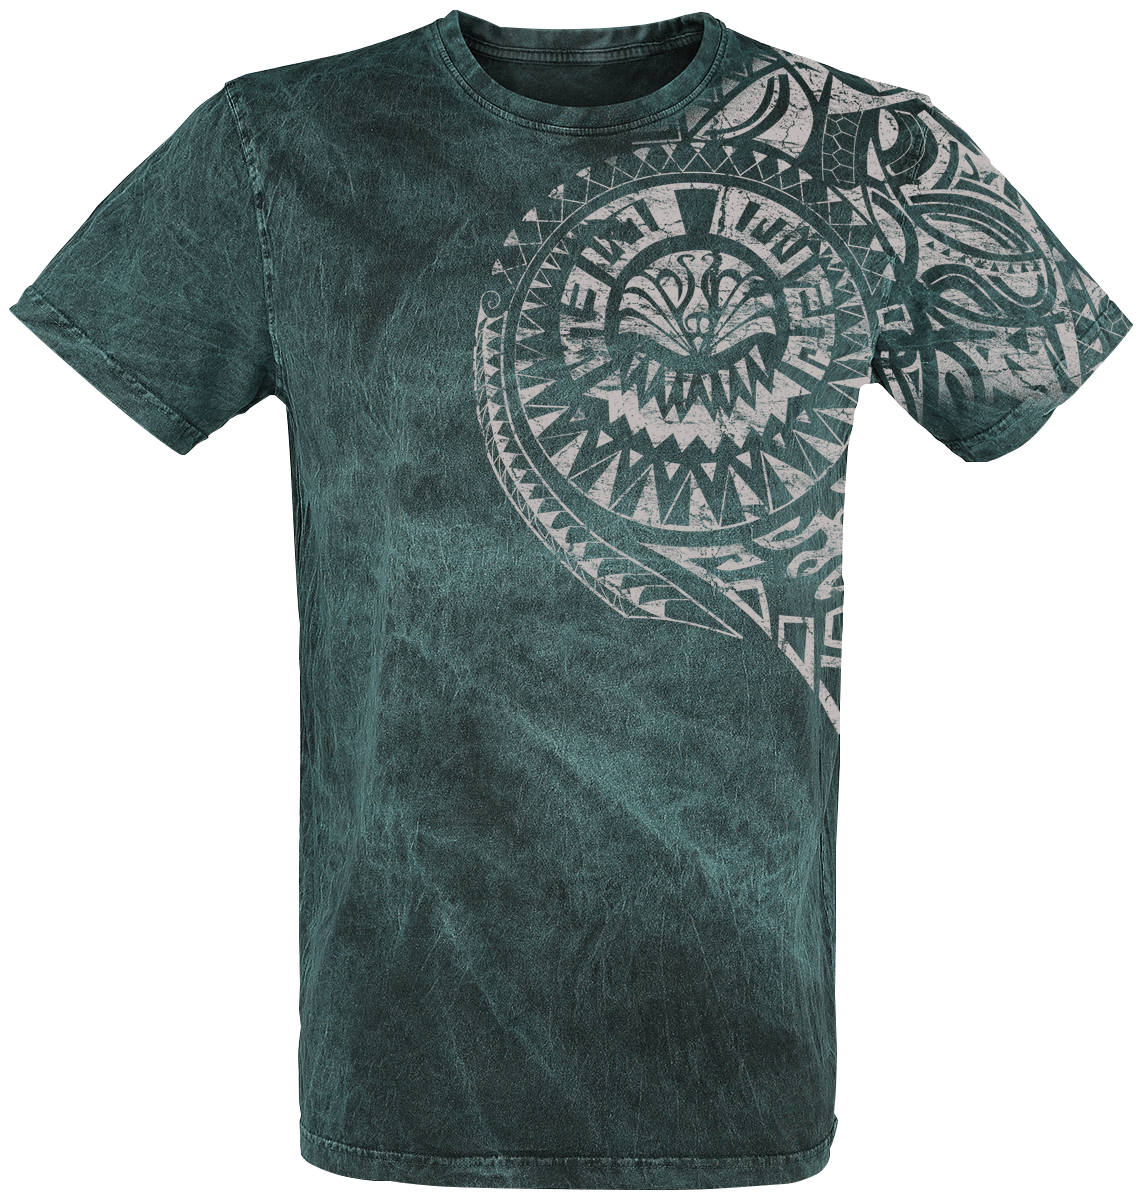 Outer Vision - Burned Tattoo - T-Shirt - grün| schwarz - EMP Exklusiv!